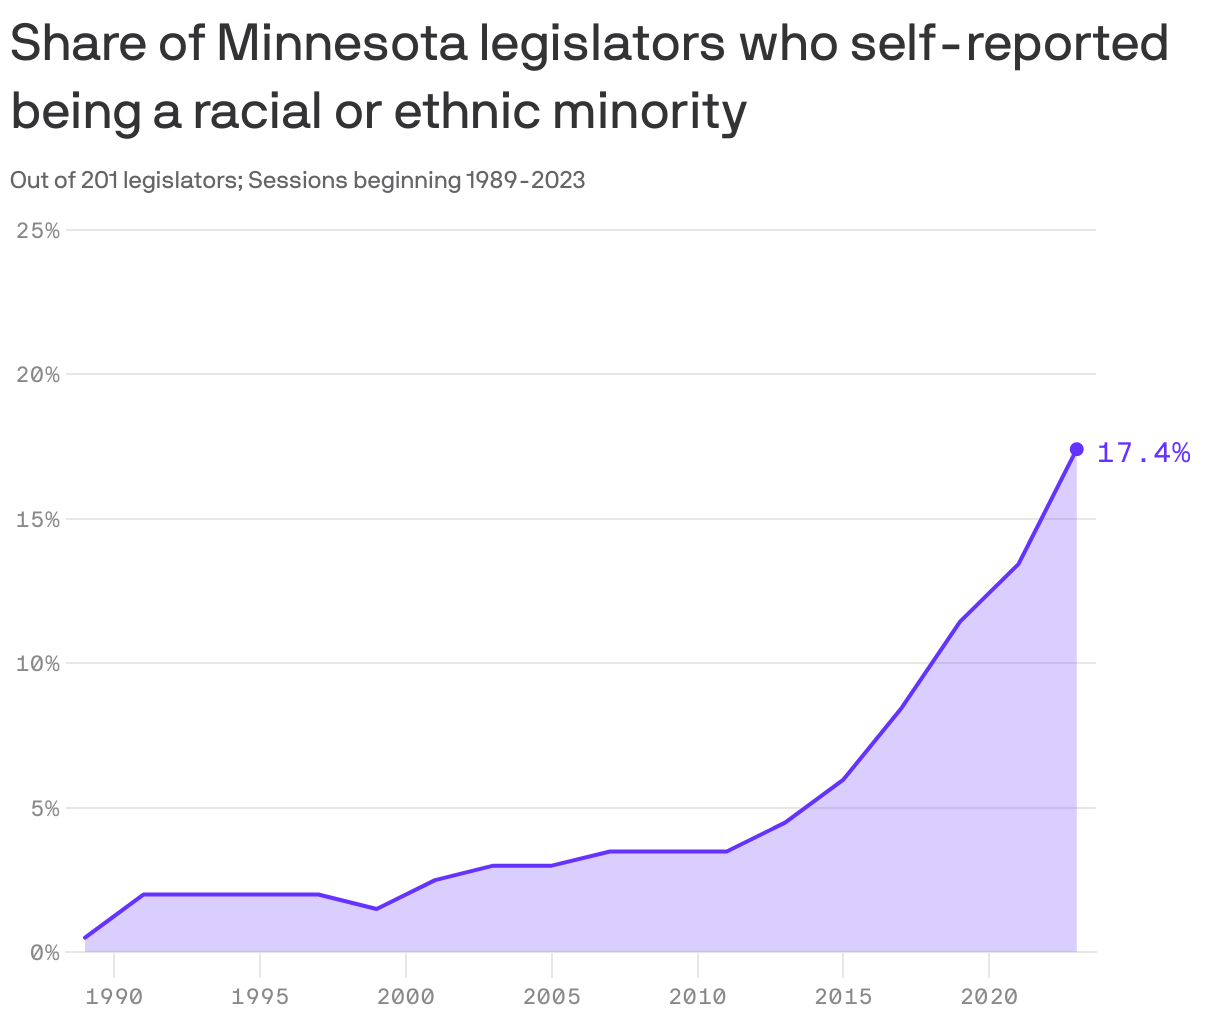 Share of Minnesota legislators who self-reported being a racial or ethnic minority